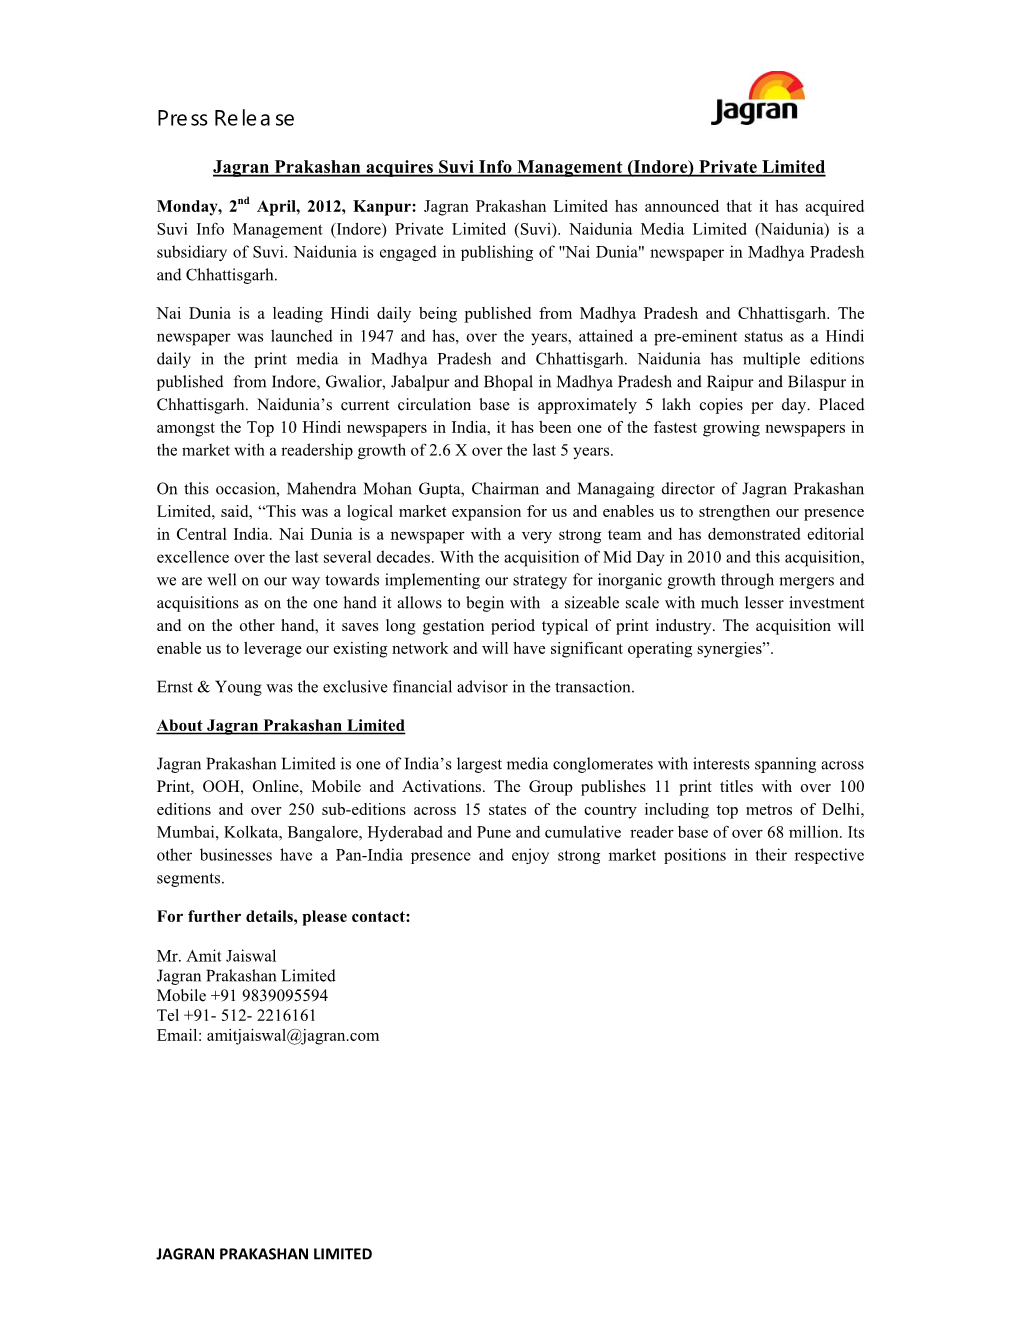 Jagran Prakashan Acquires Suvi Info Management (Indore) Private Limited